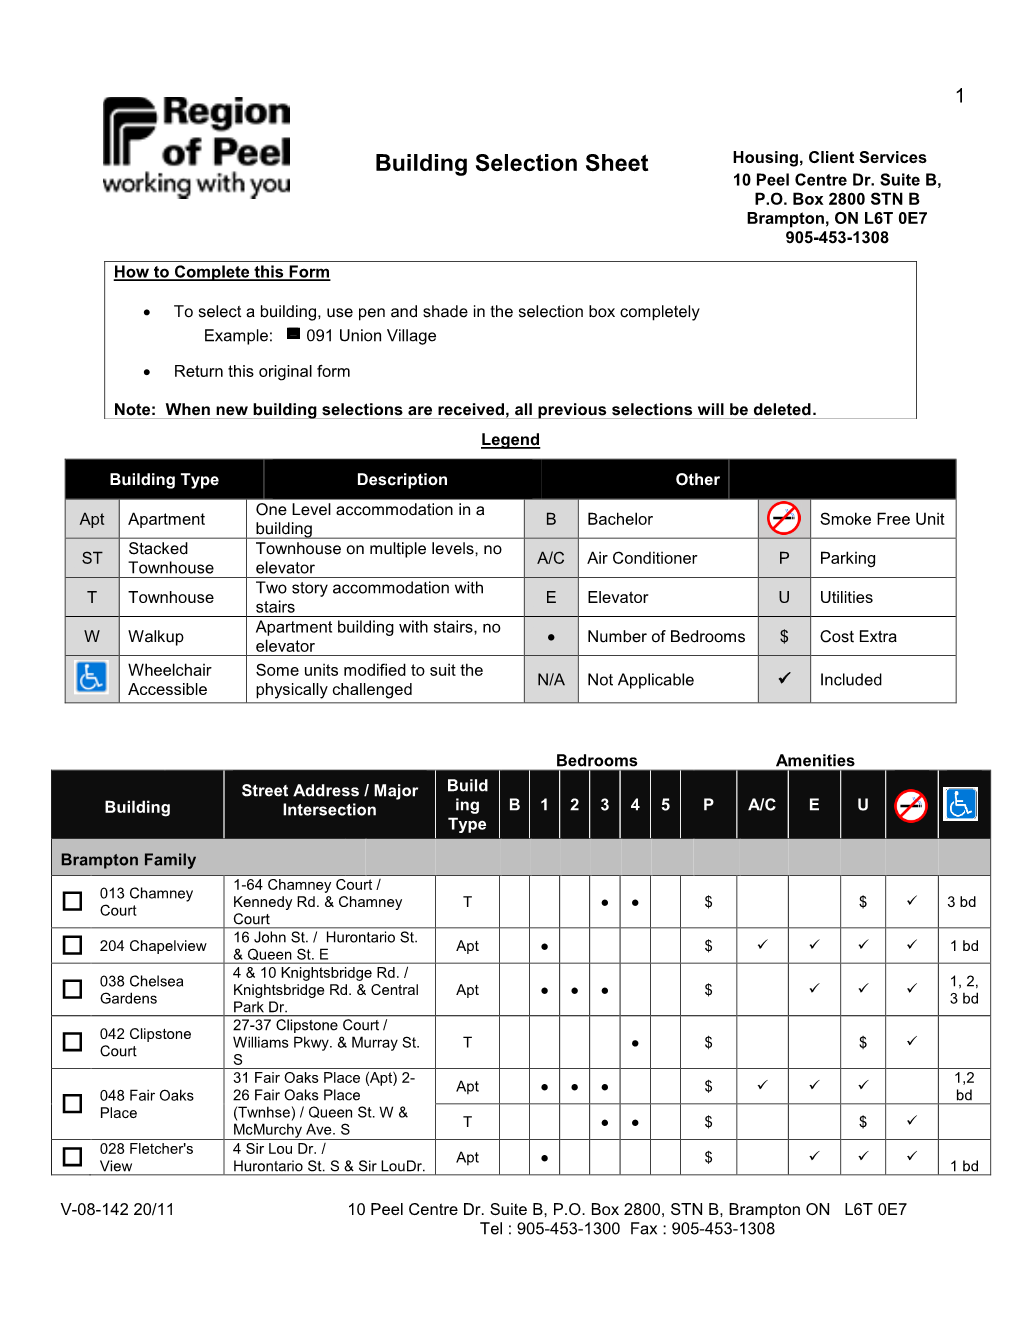 Building Selection Sheet (PDF)